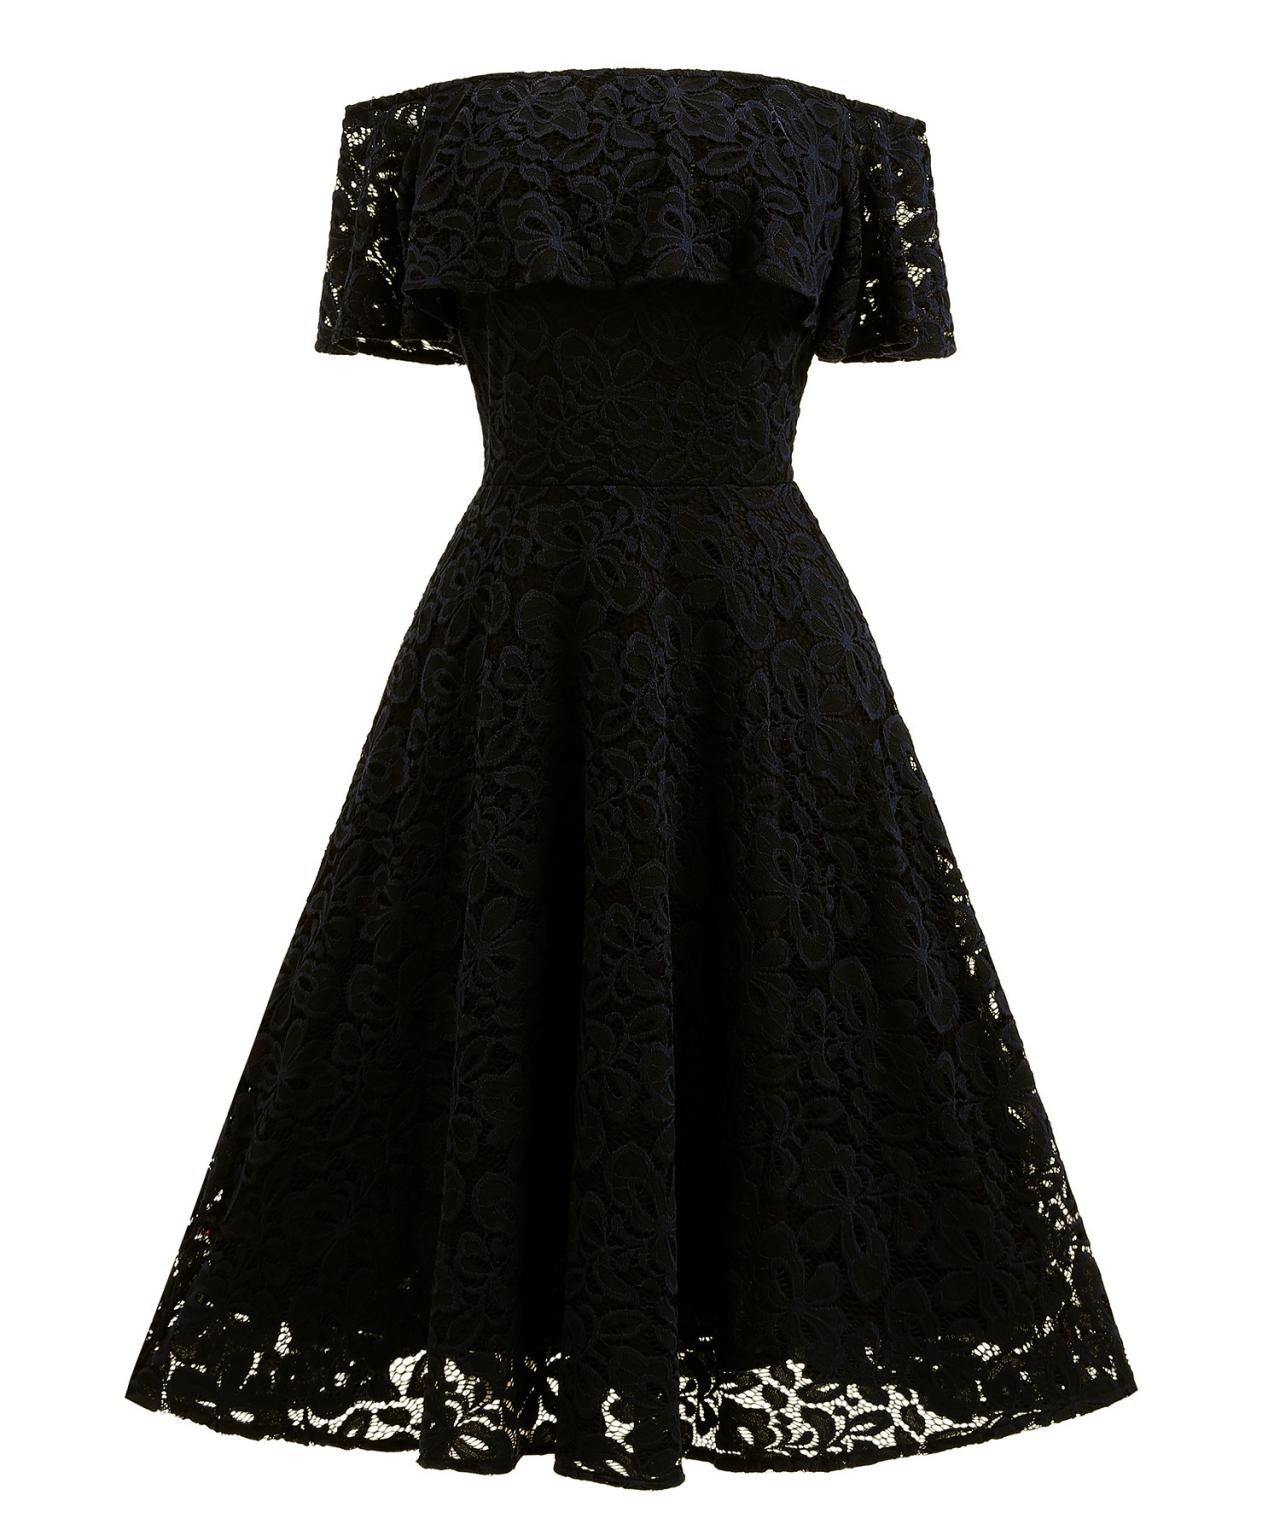 Women Ruffles Lace Dress Off the Shoulder Cocktail Party Gown Female Vintage Big Swing A Line Dress black